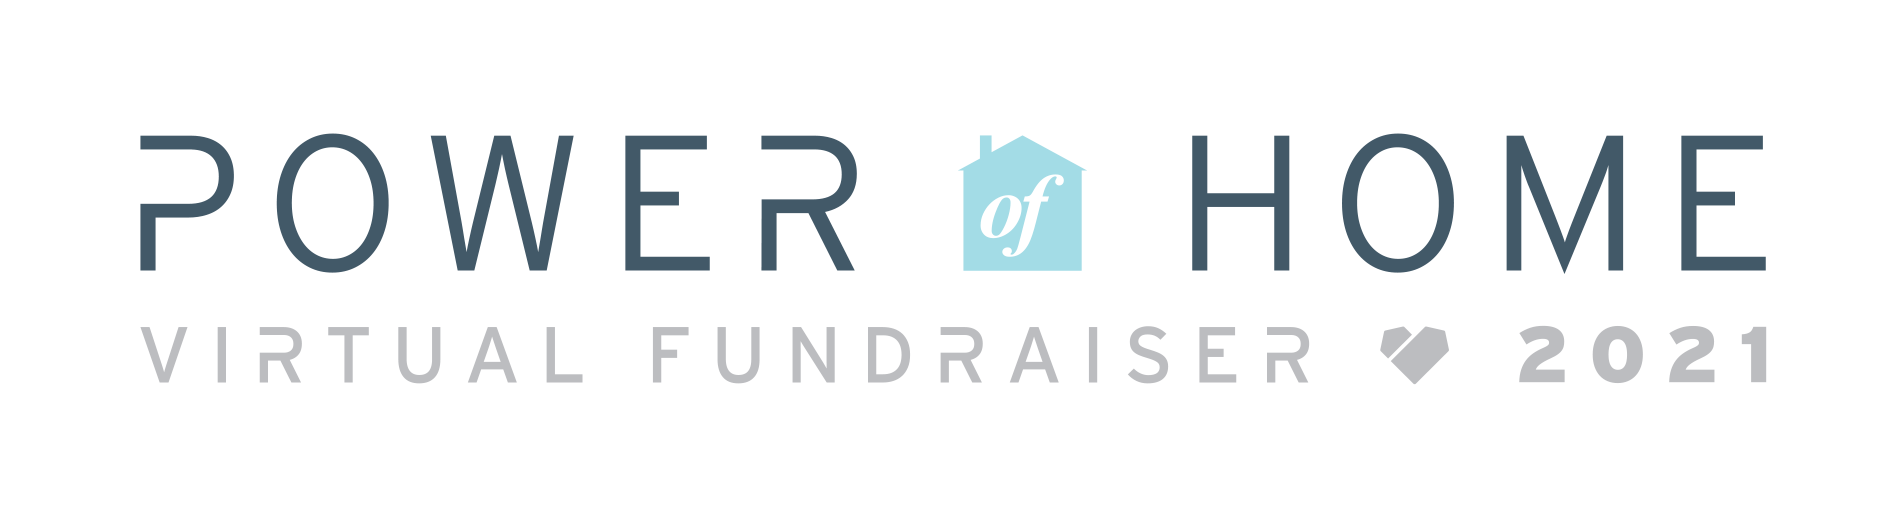 Power of Home Virtual Fundraiser 2021